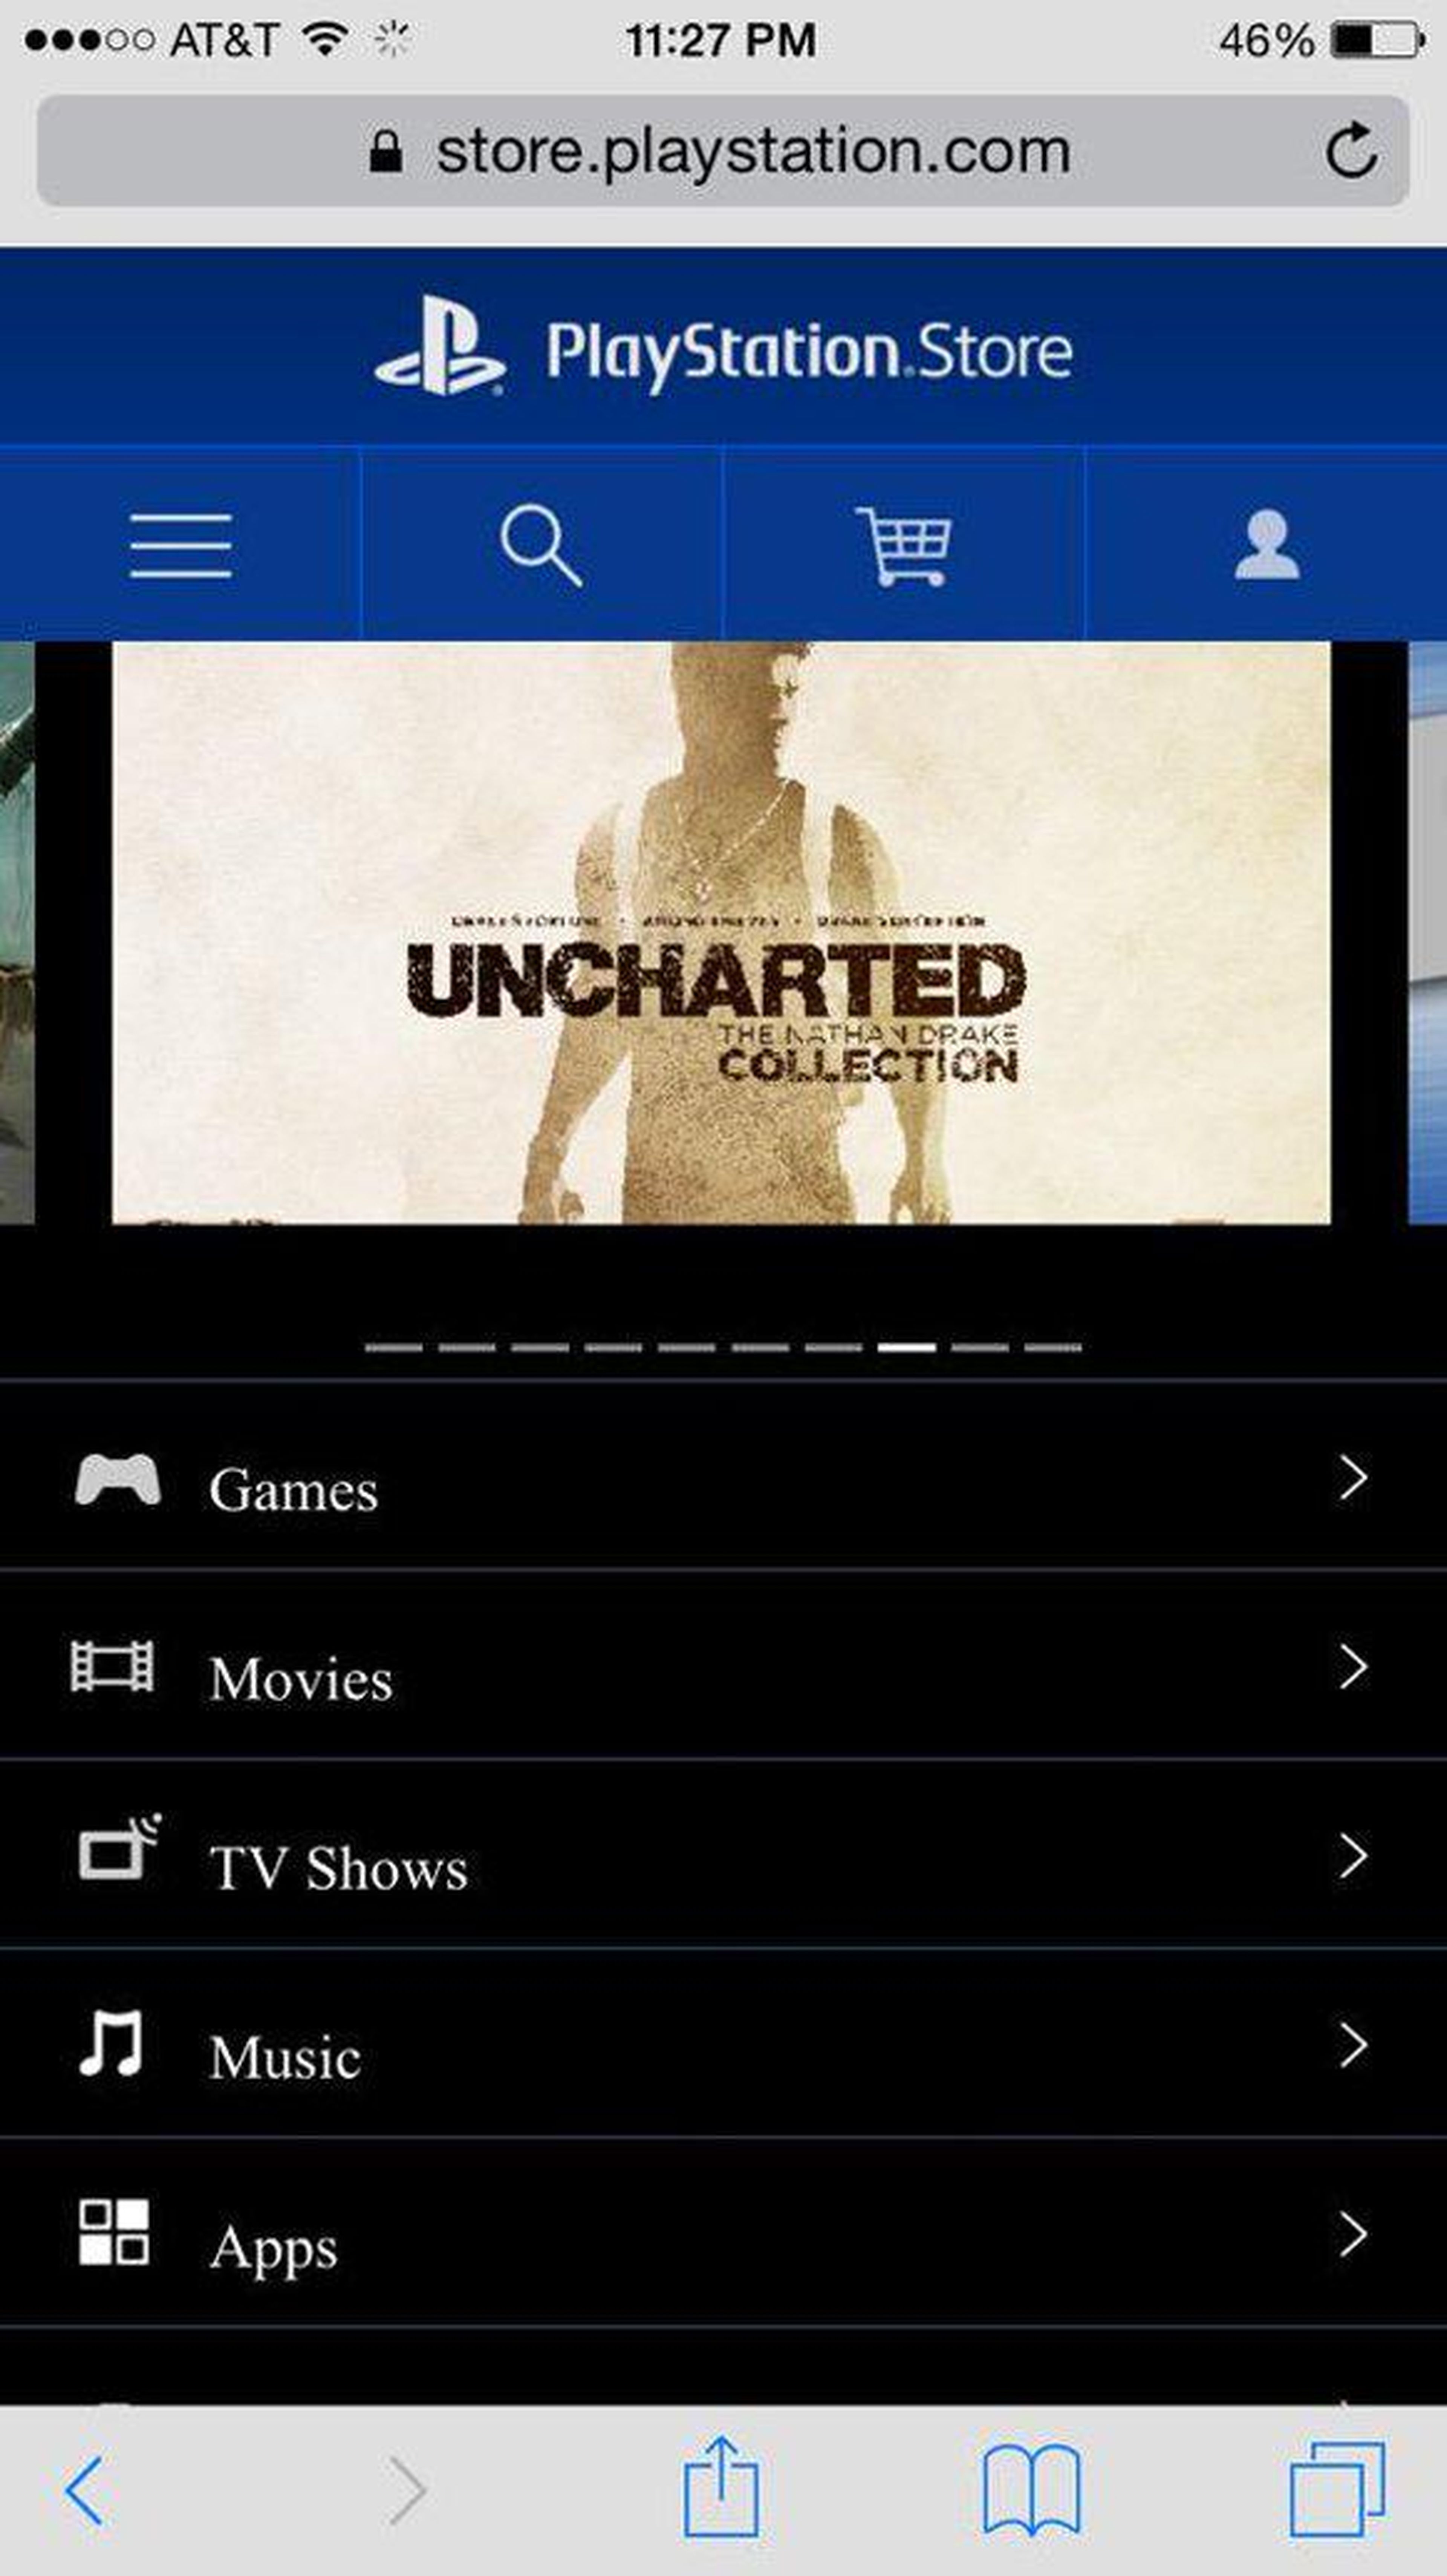 Uncharted The Nathan Drake Collection confirmado para PS4